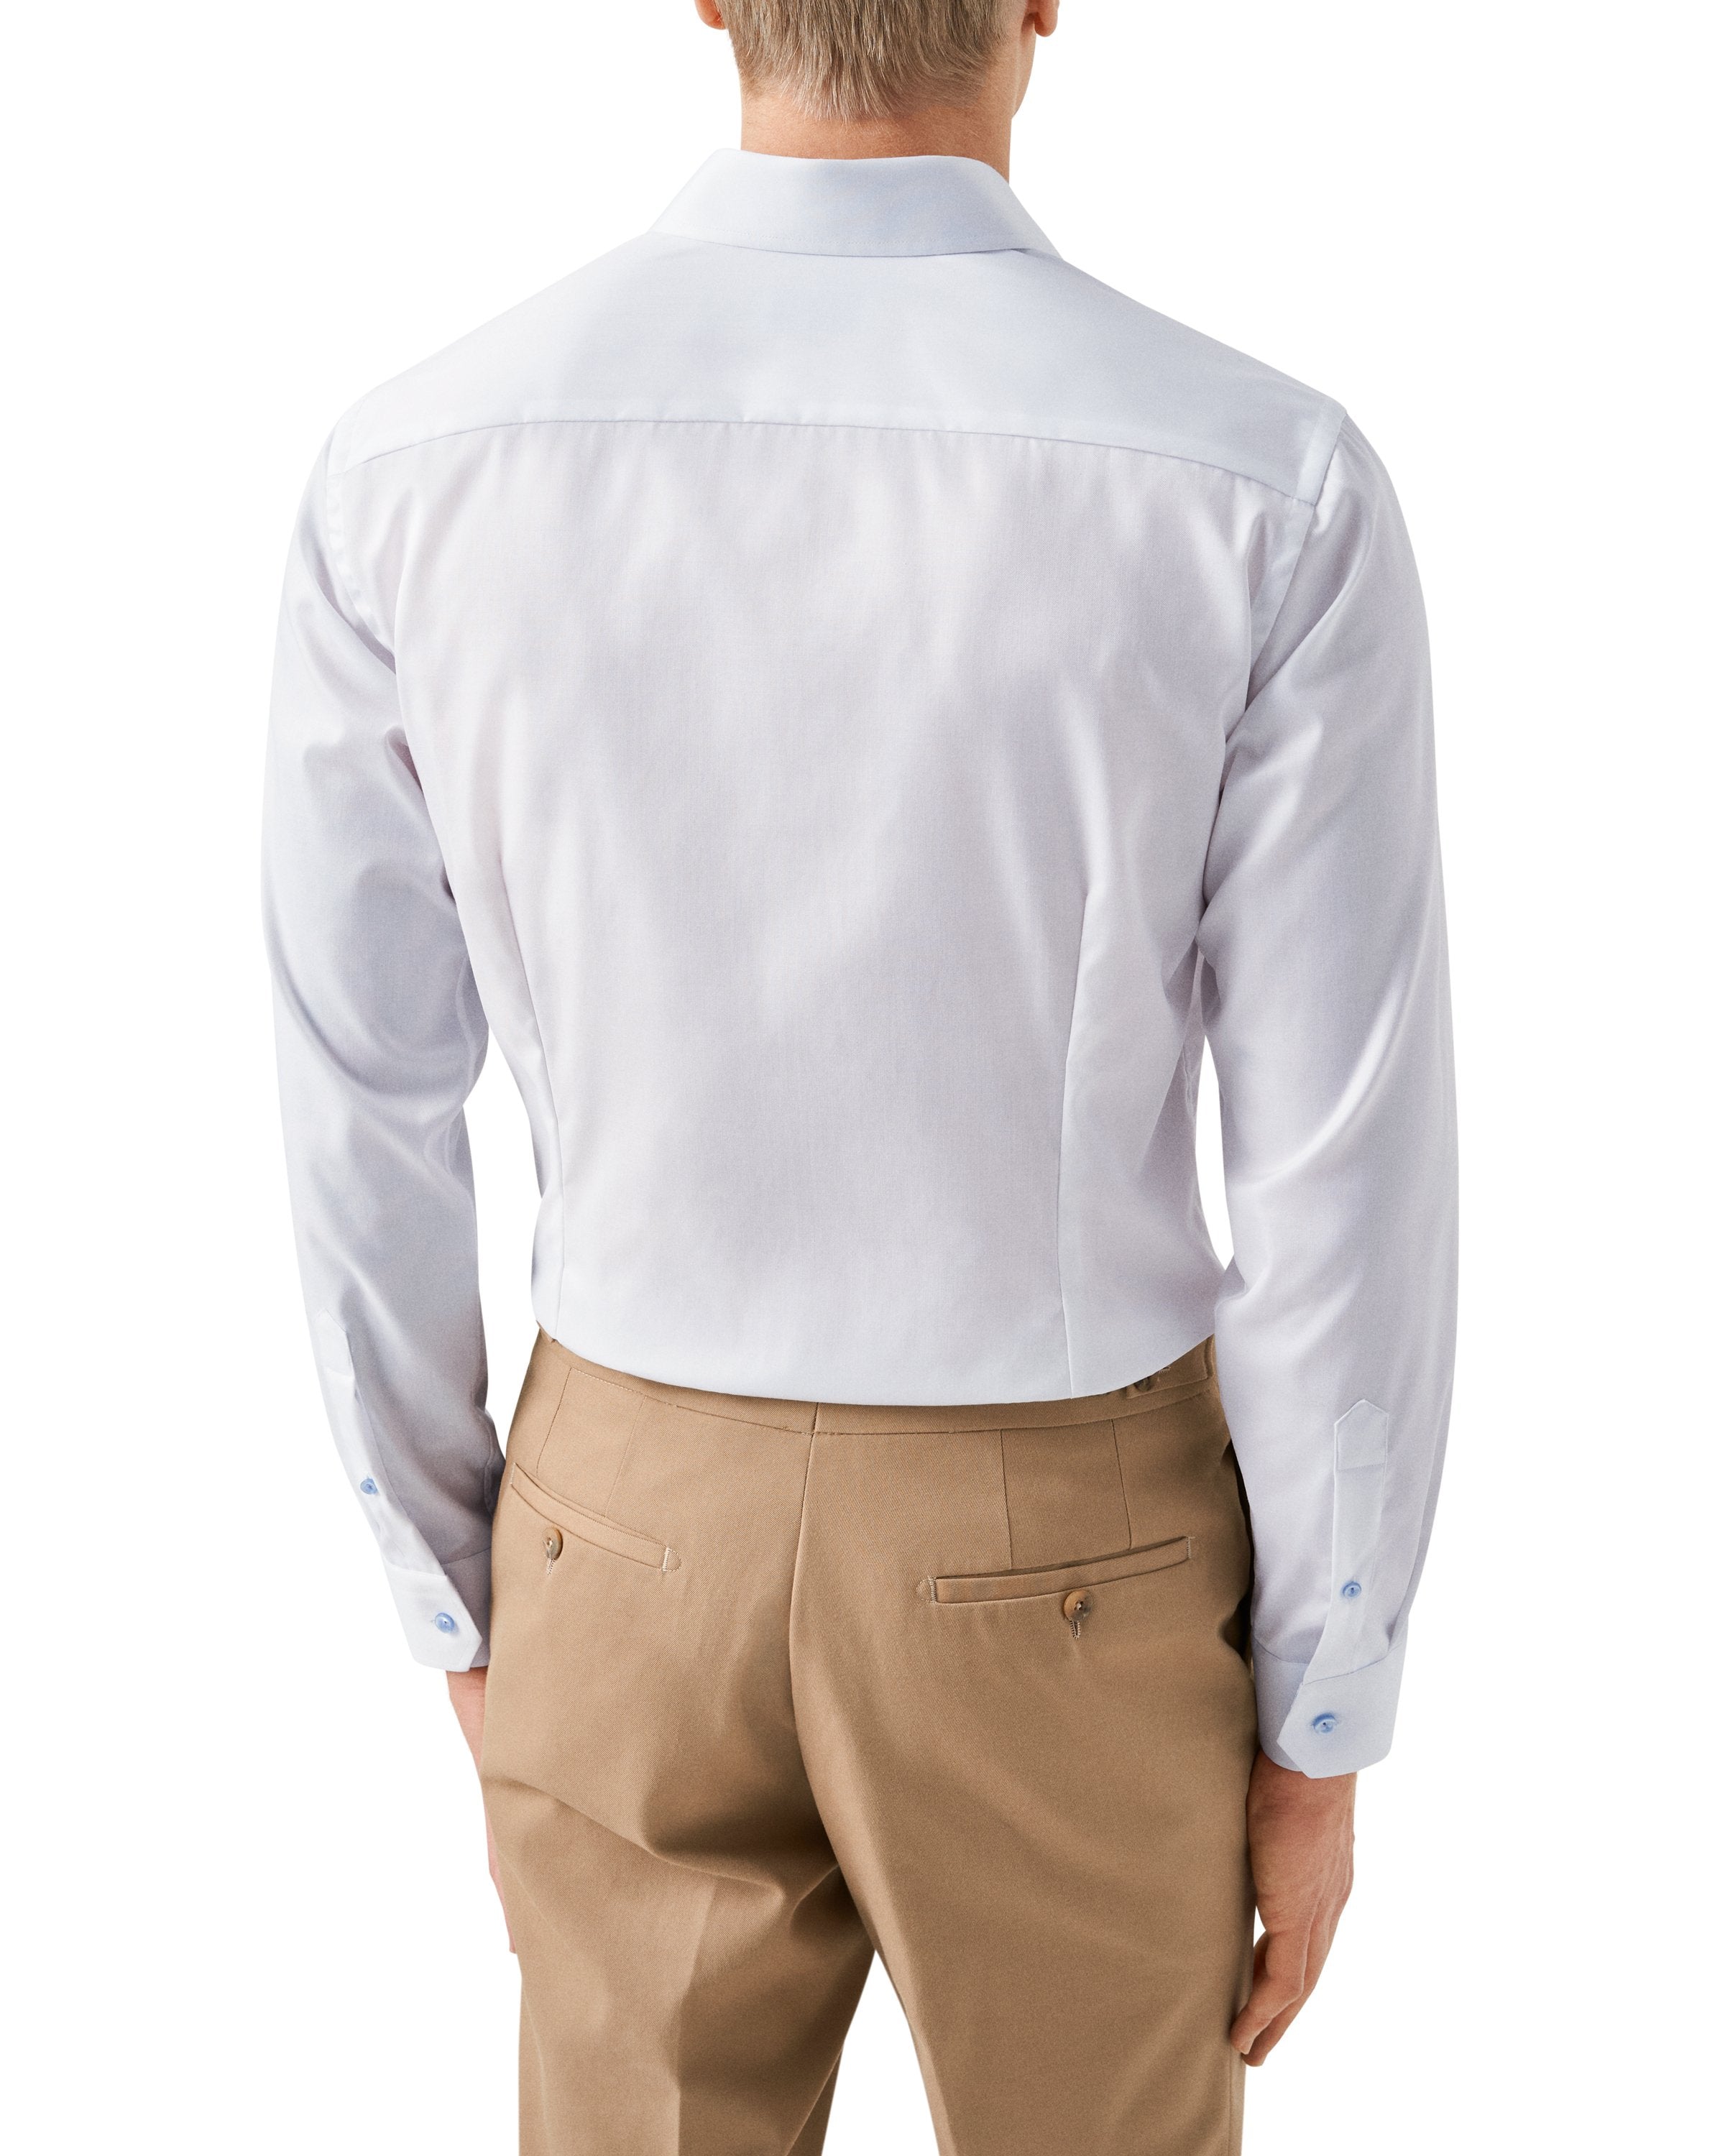 ETON - White CONTEMPORARY FIT Signature Twill Shirt - Geometric Contrast Details 10001210600